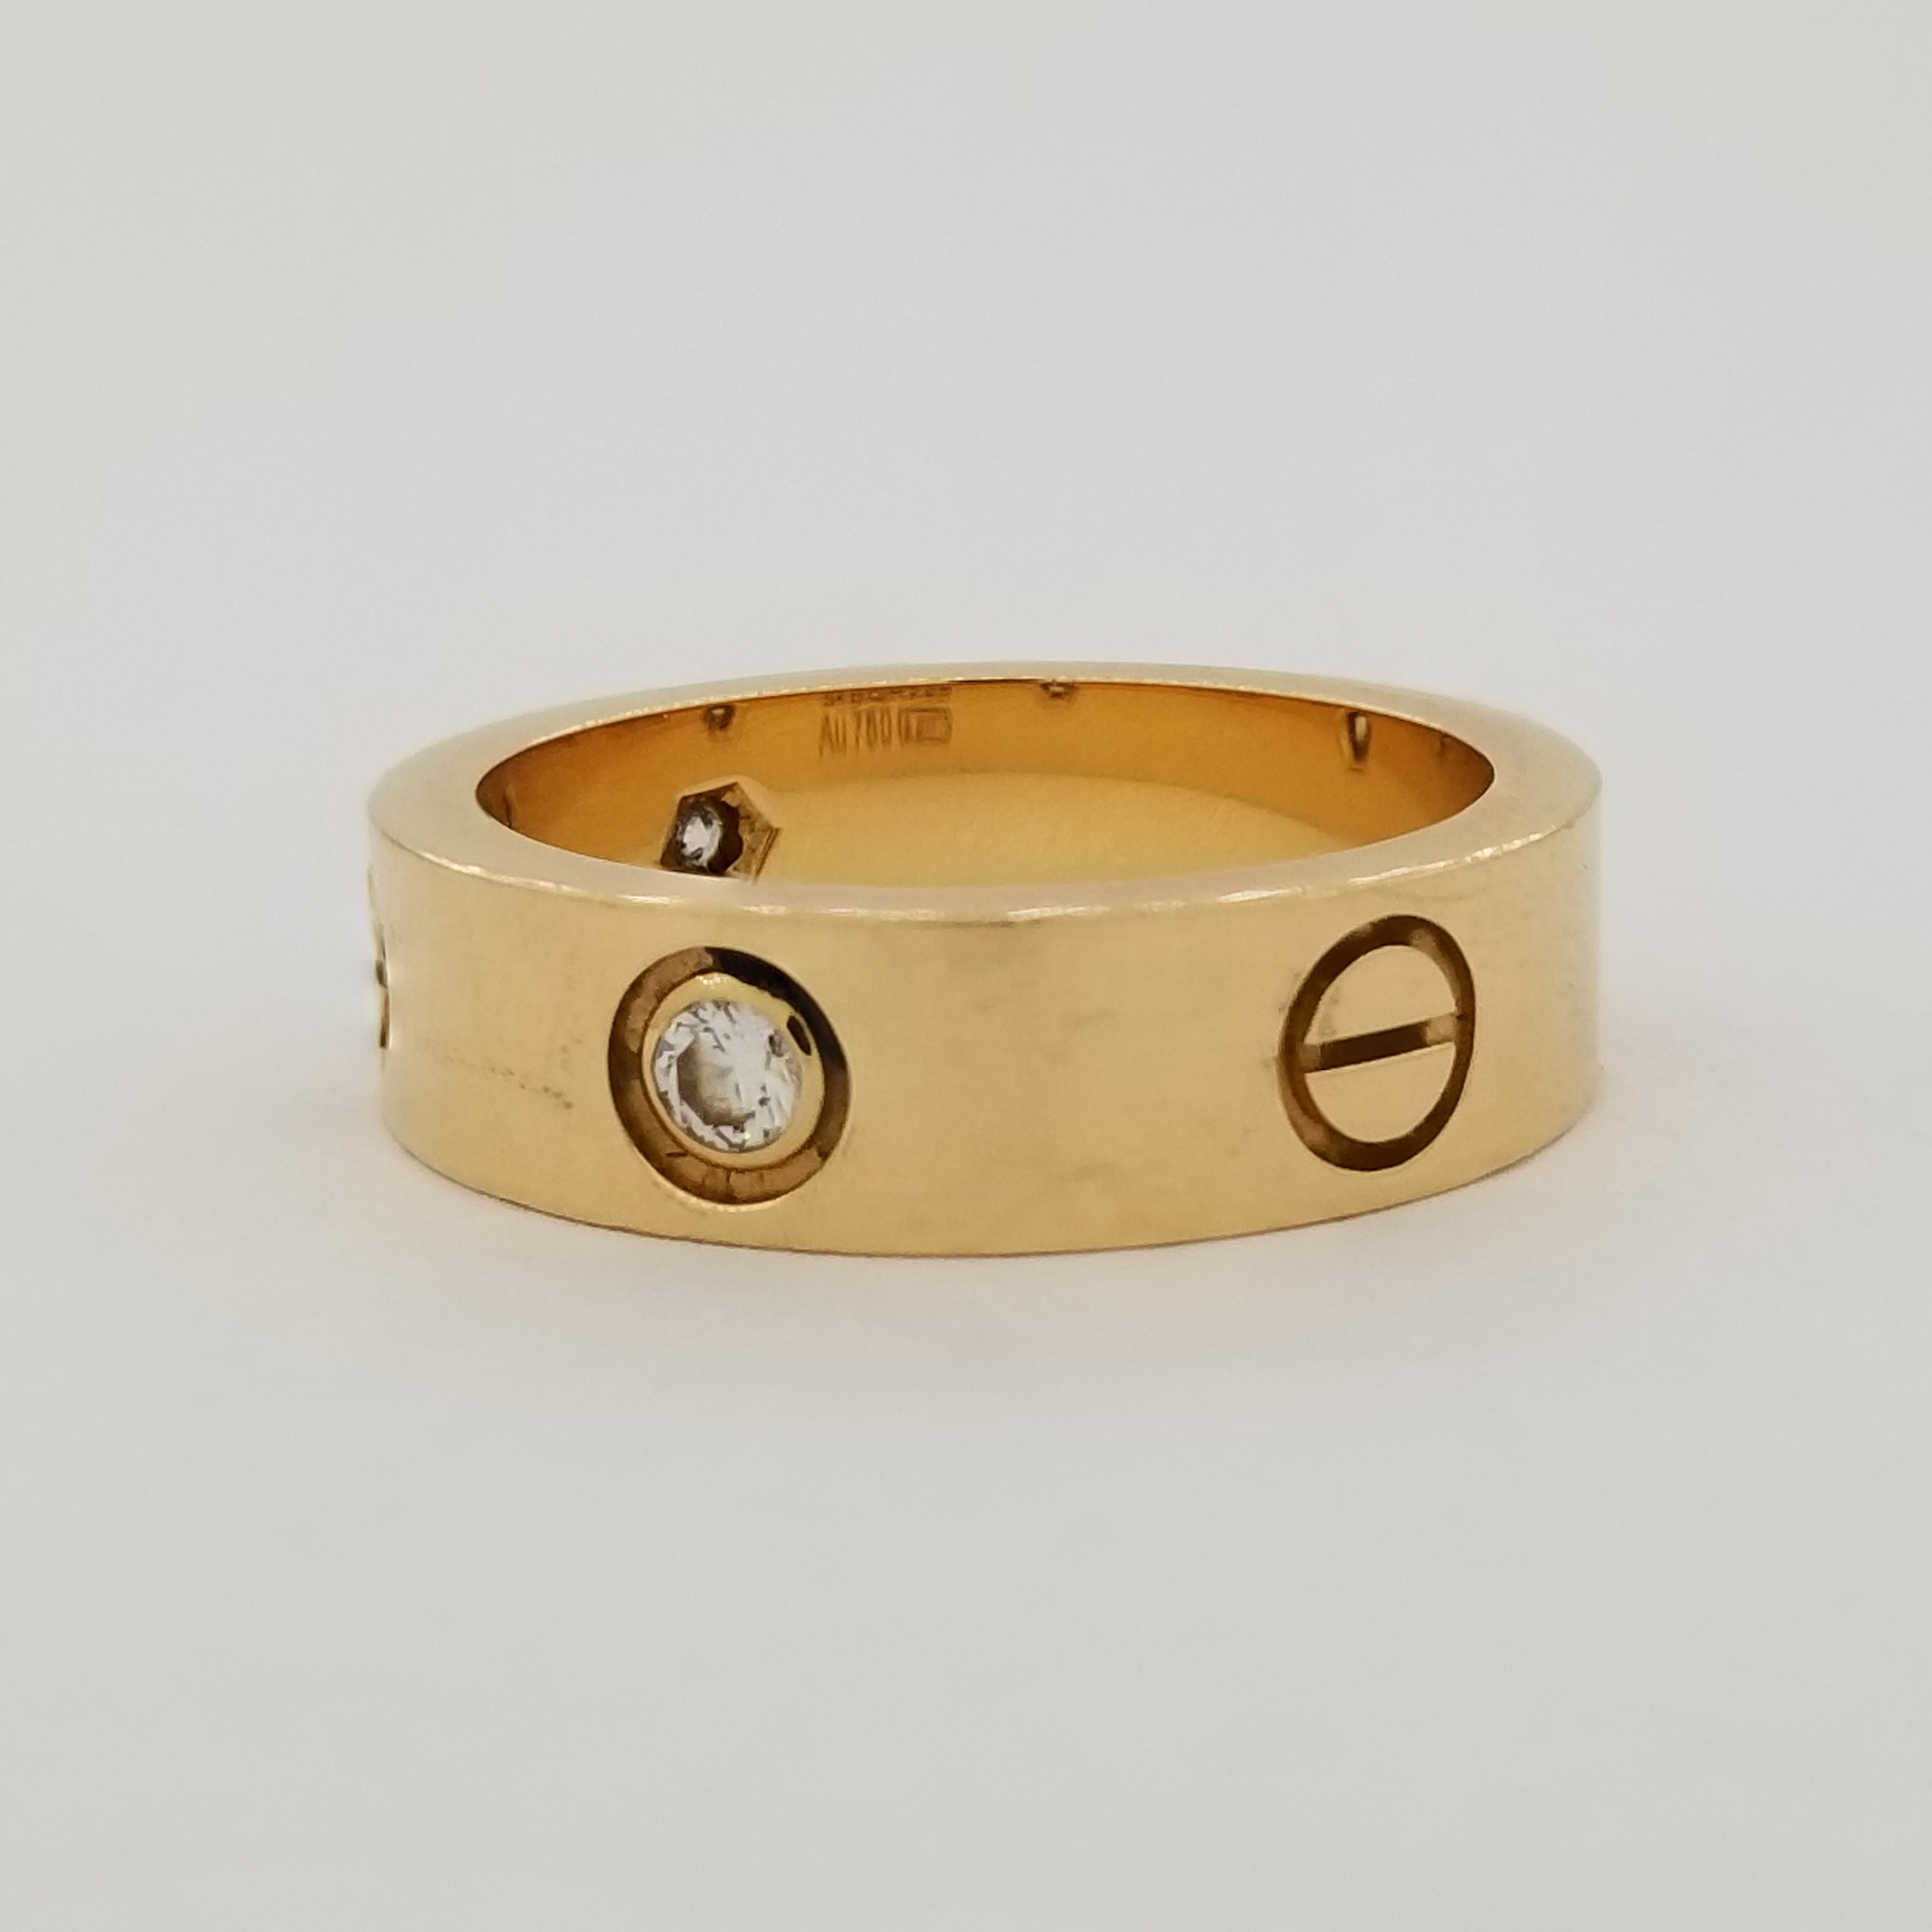 Cartier 18K Gold Diamond LOVE Ring - Image 4 of 5